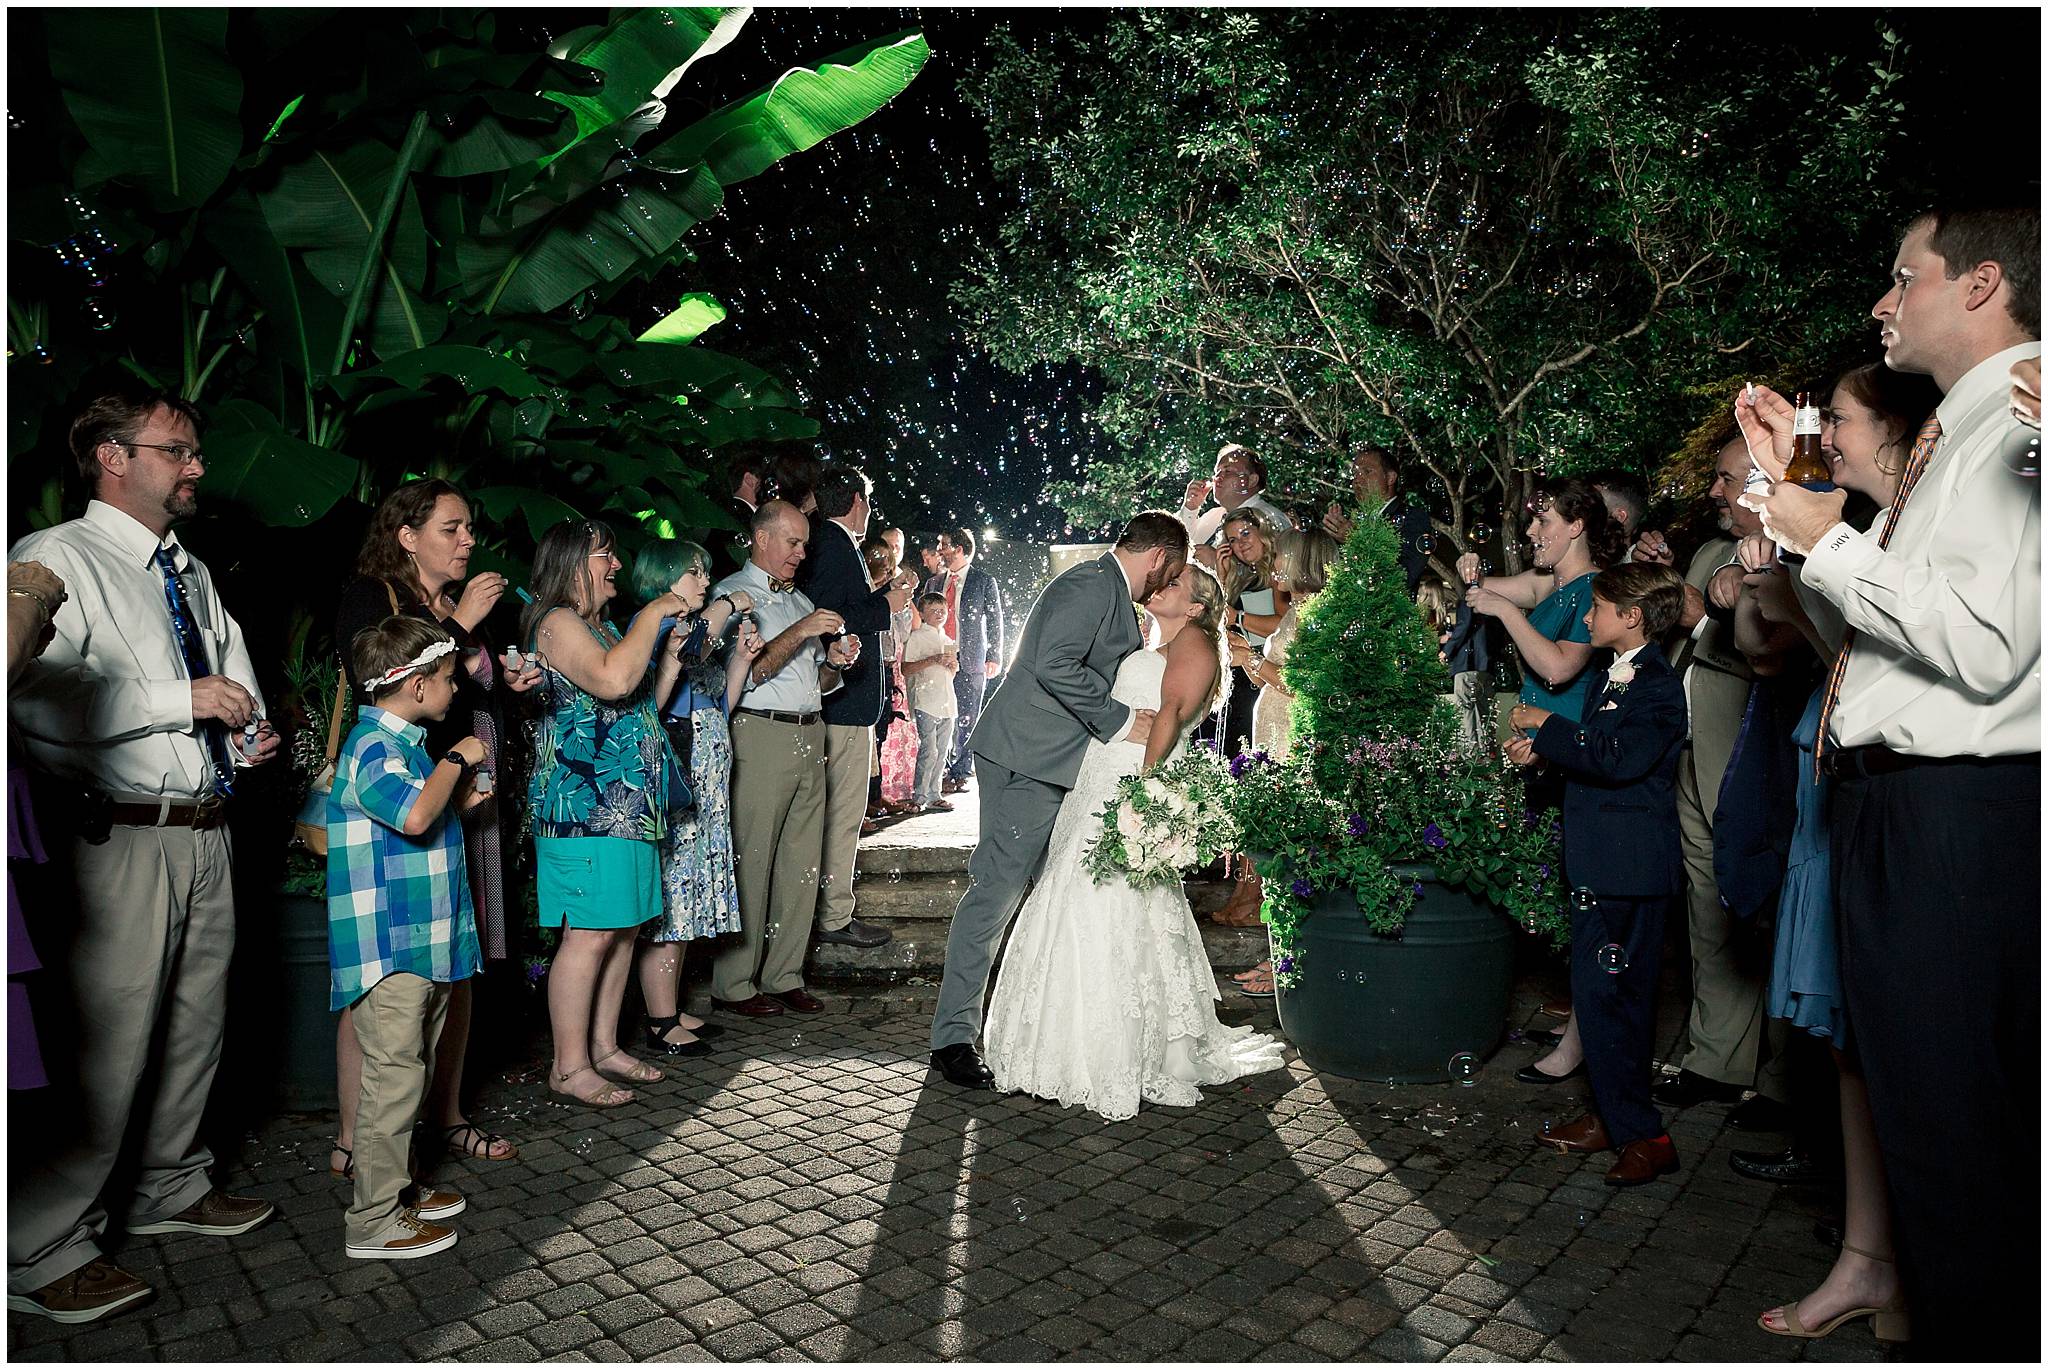 State Botanical Gardesn best wedding photographers in athens georgia ga_0079.jpg